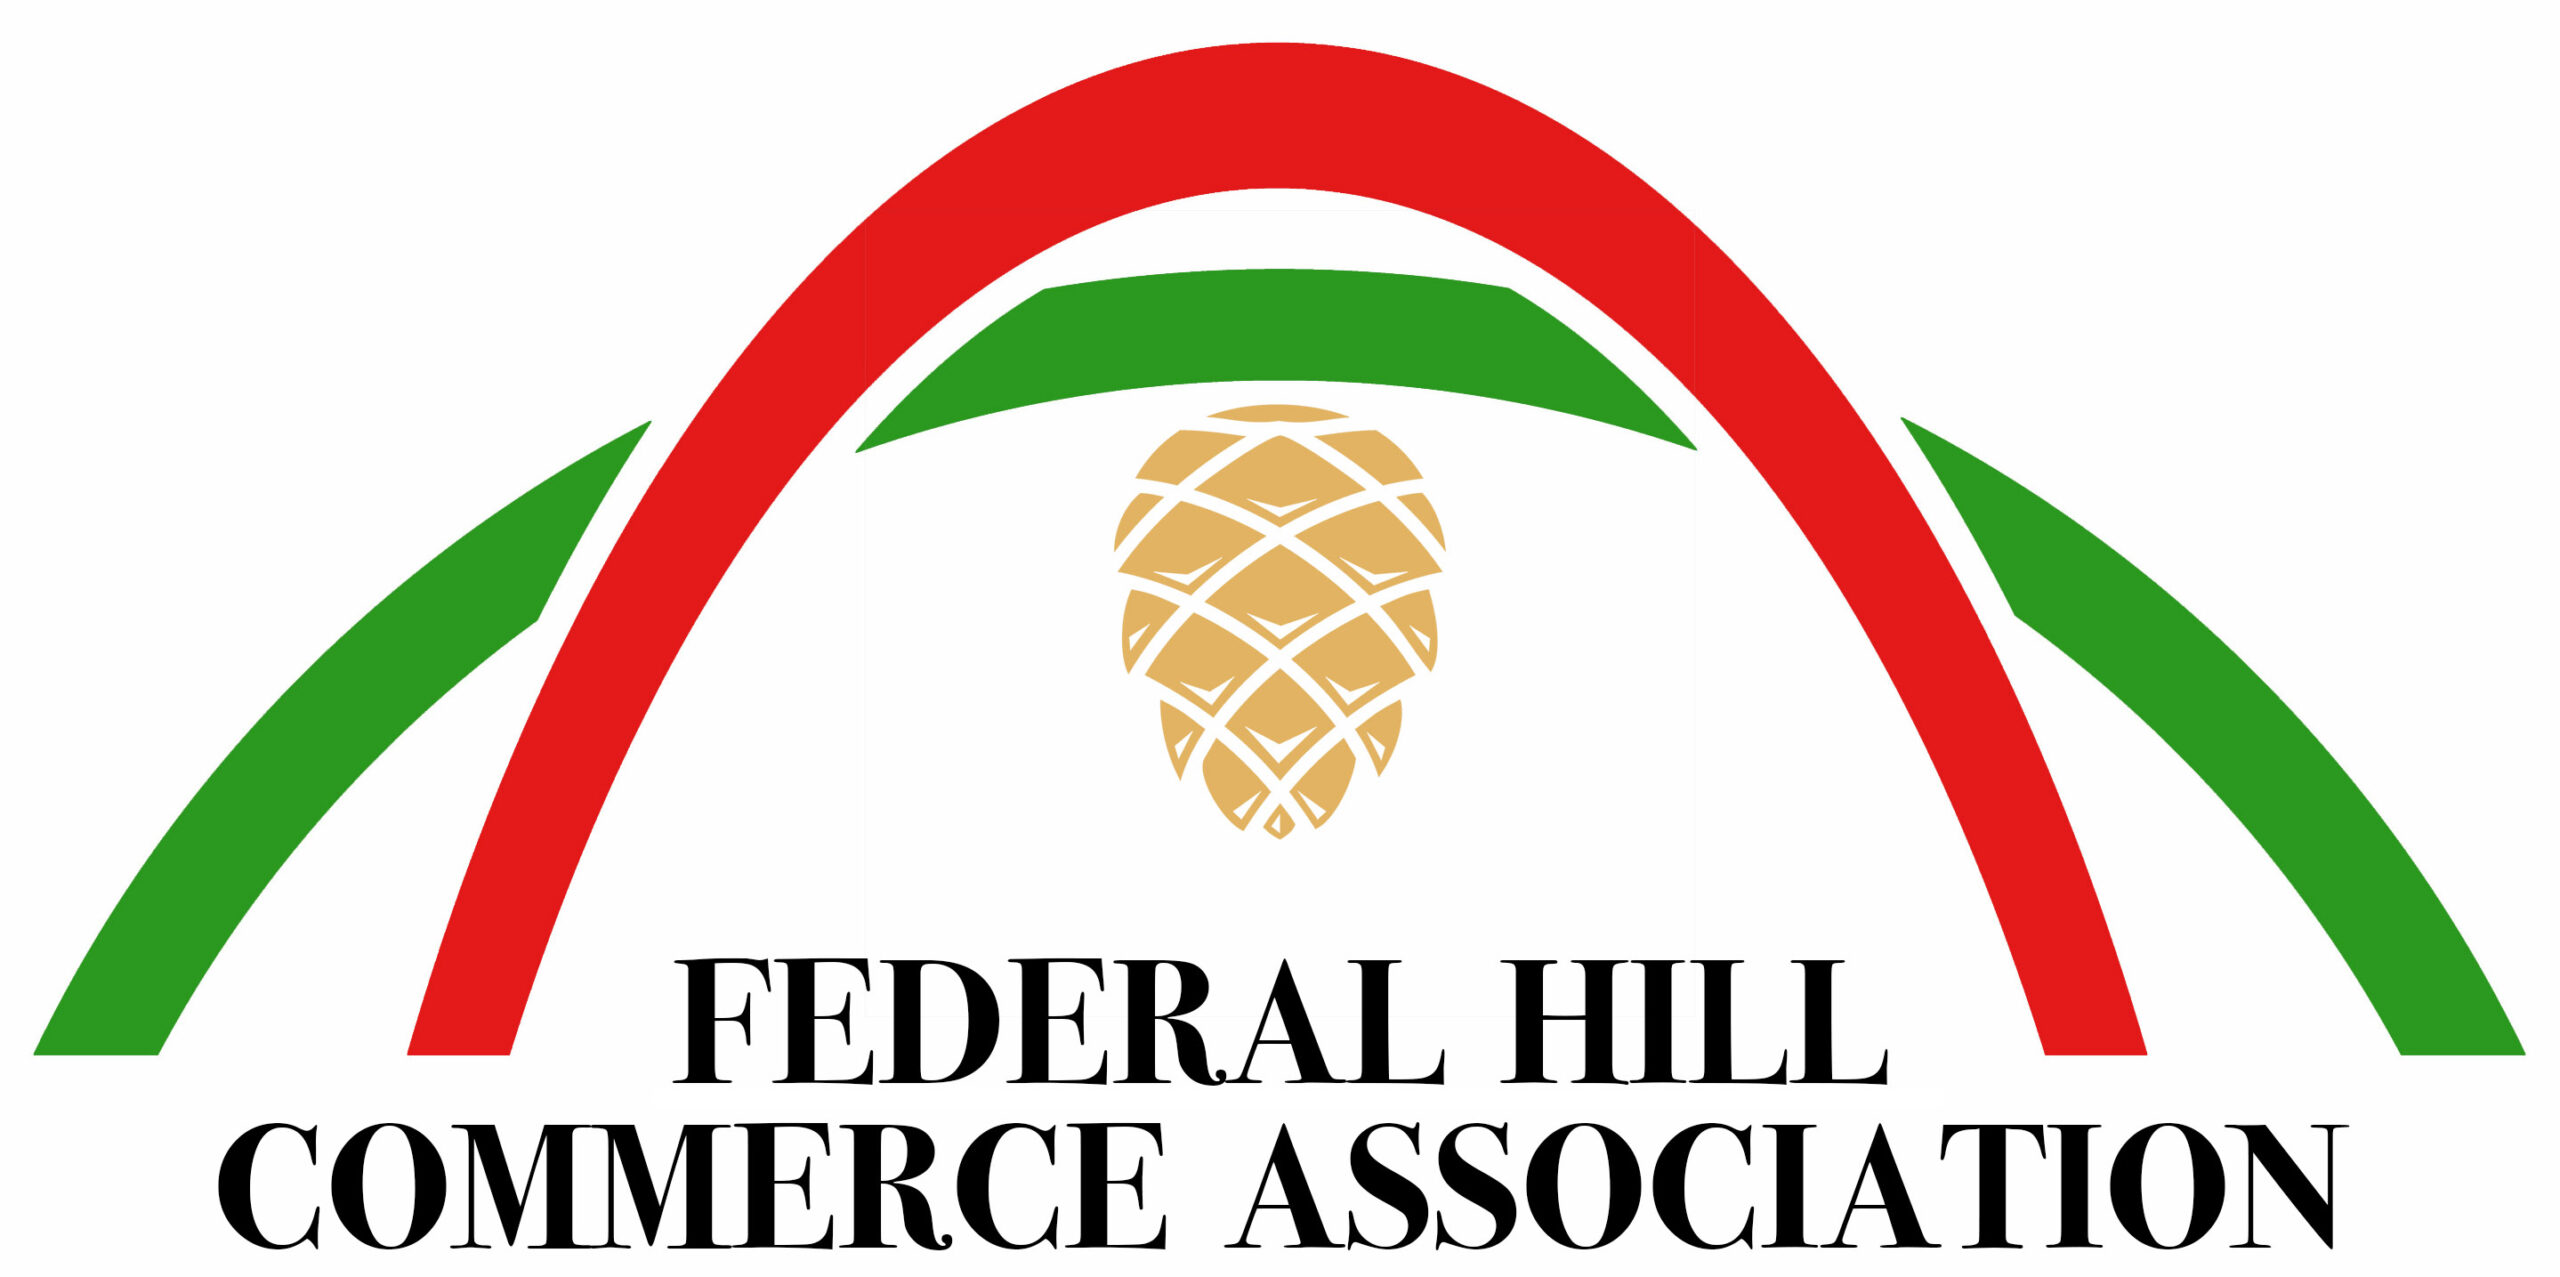 federal hill commerce association logo 2021